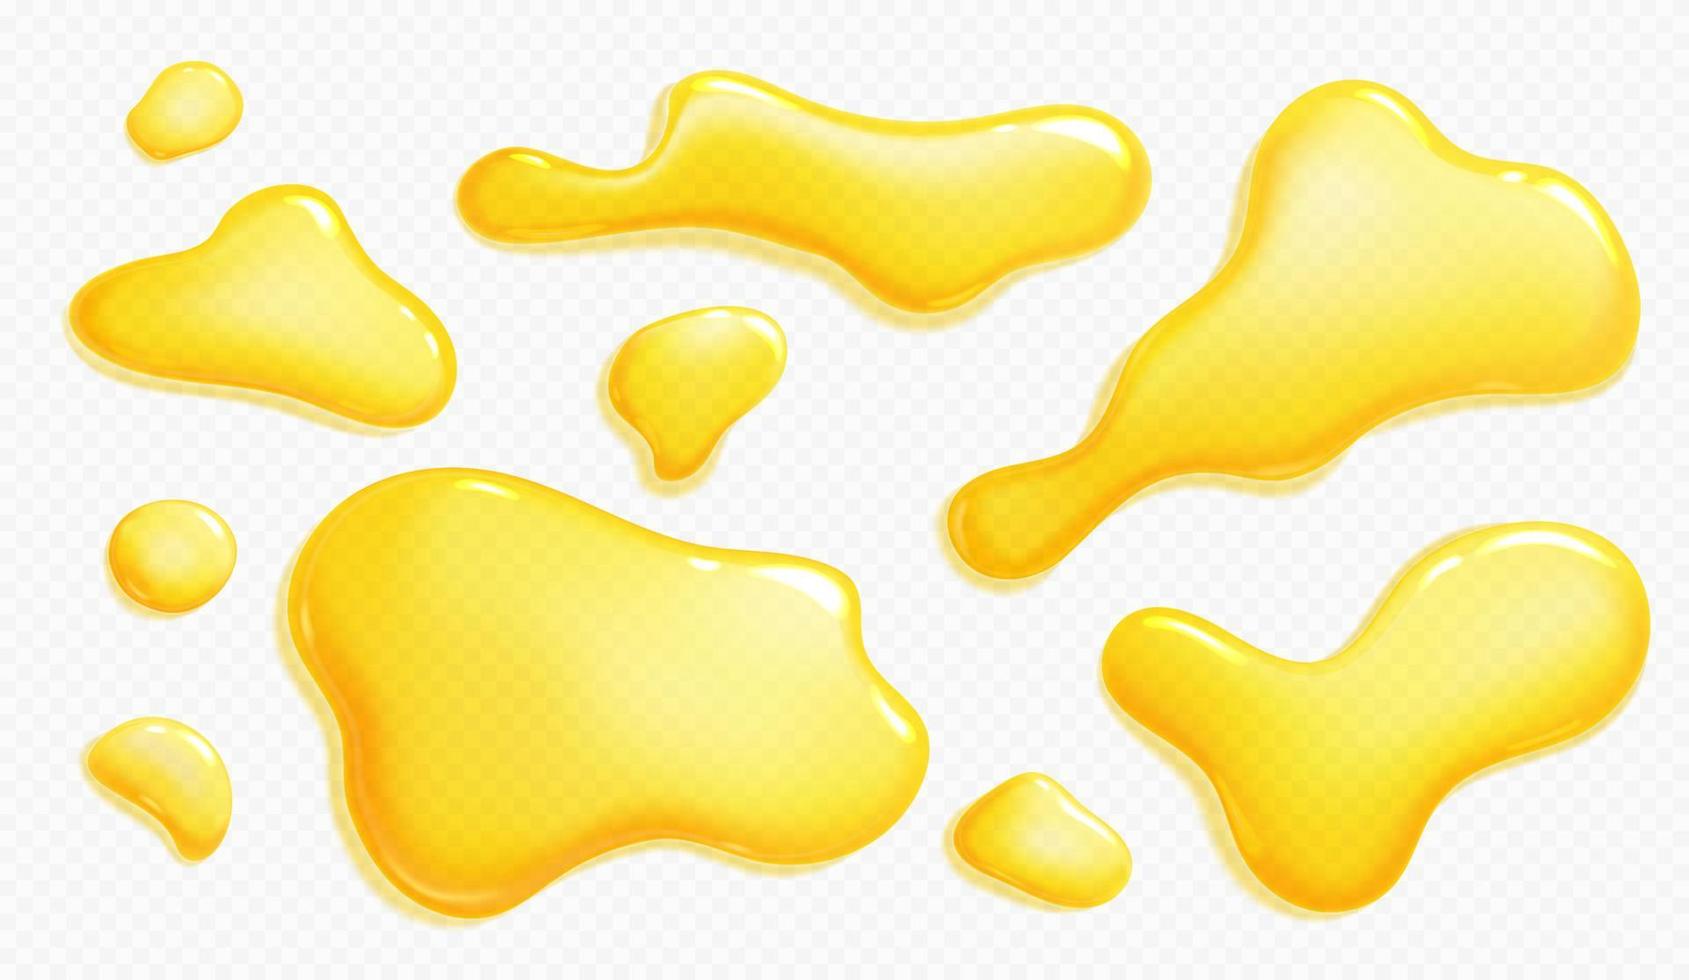 Orange juice, honey or oil spills and drops vector